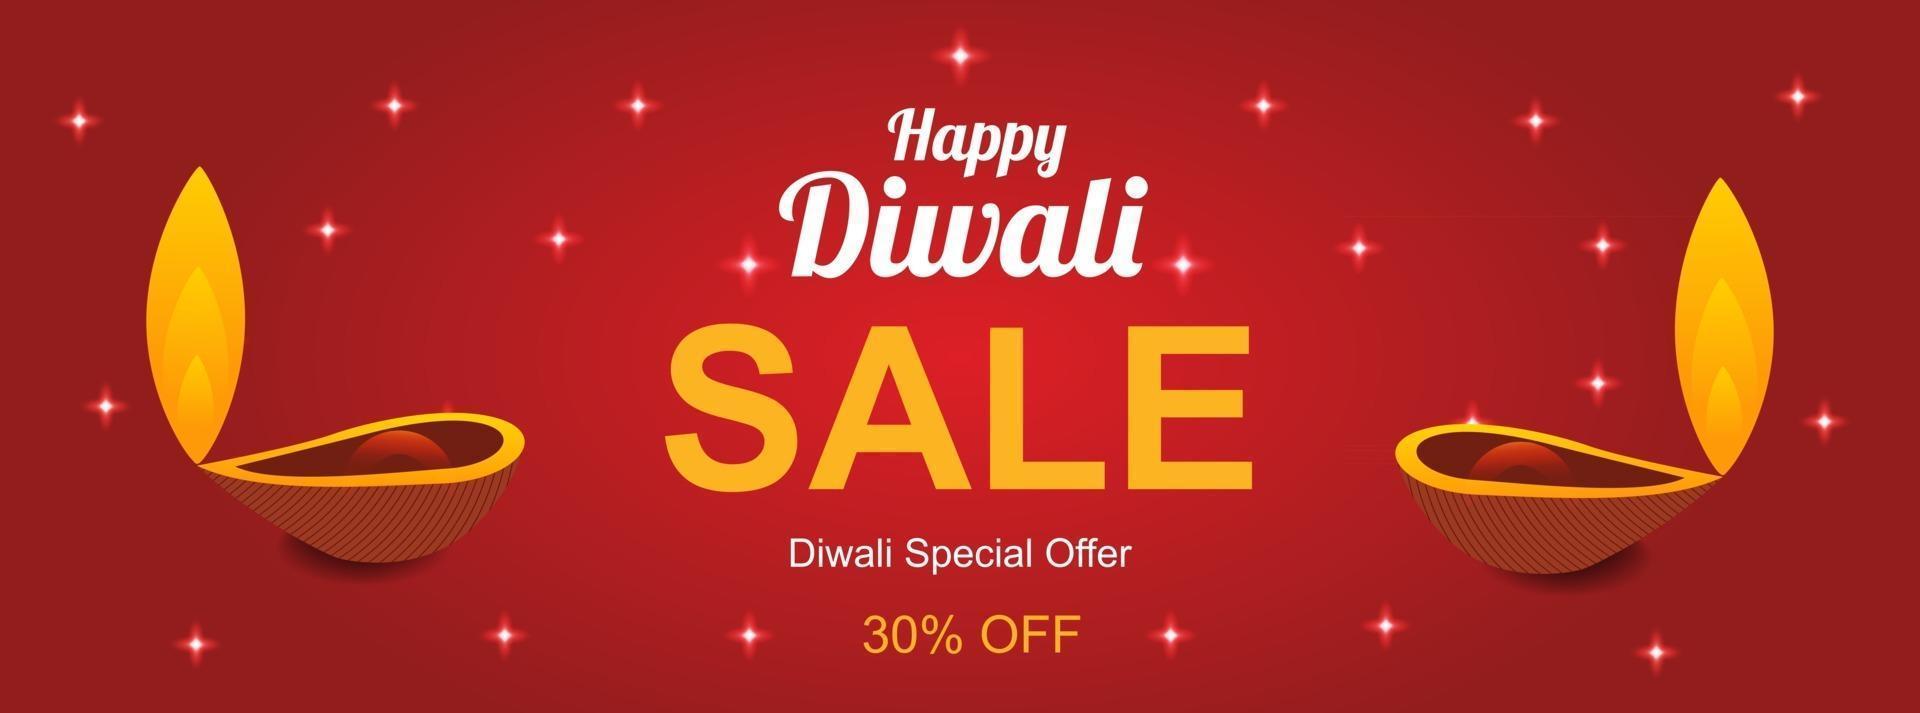 Happy diwali sale social media banner template vector